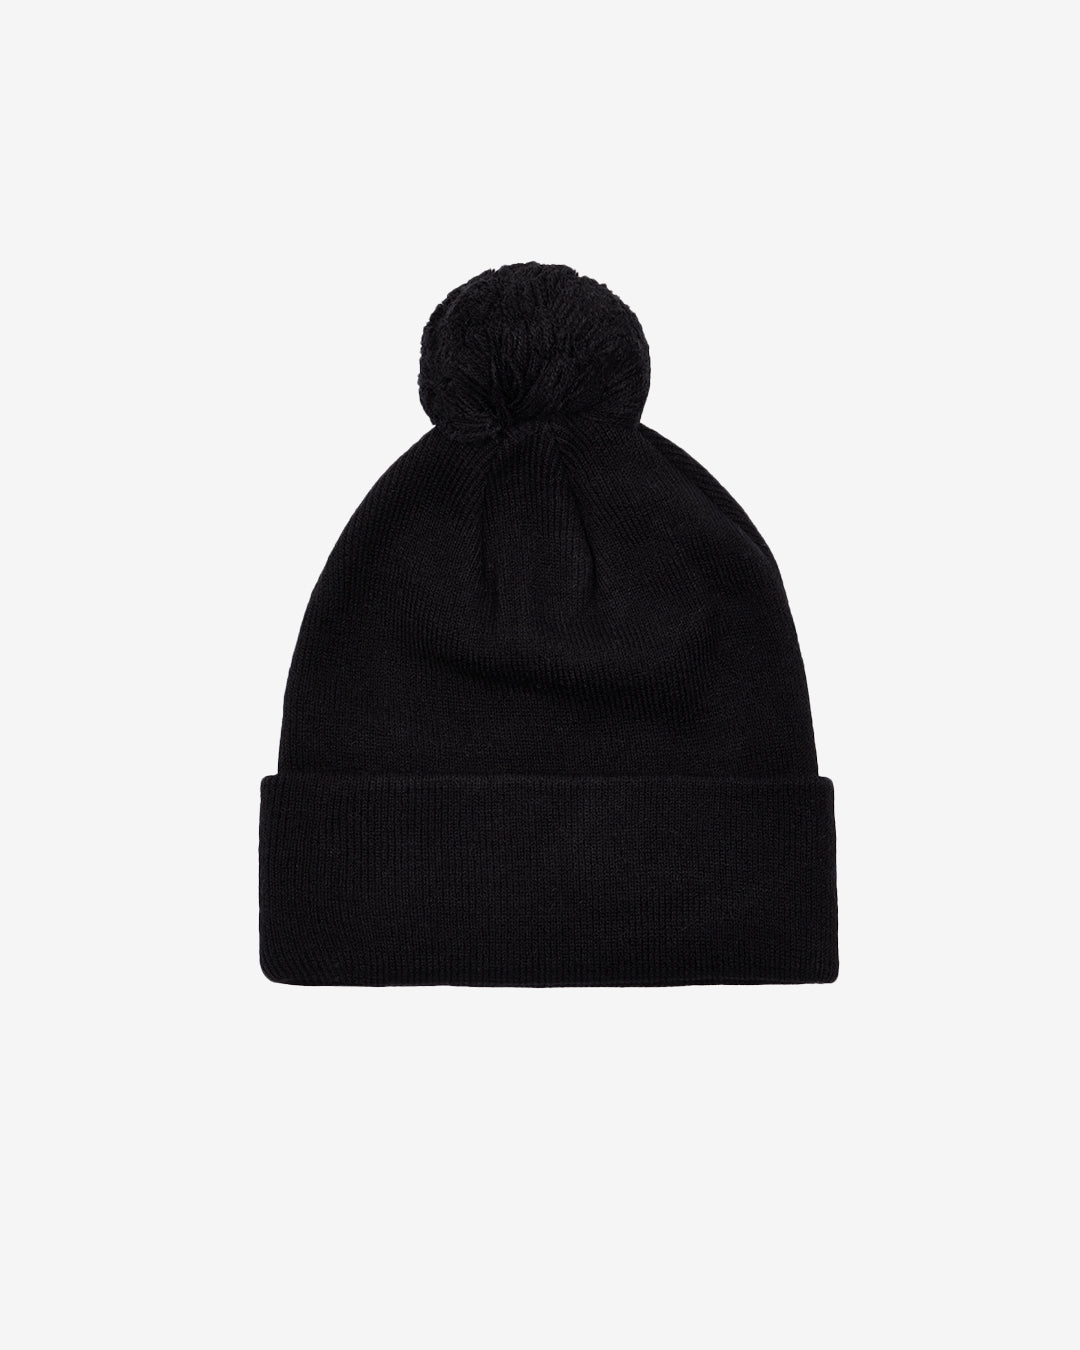 U:0212 - Bobble Hat - Black